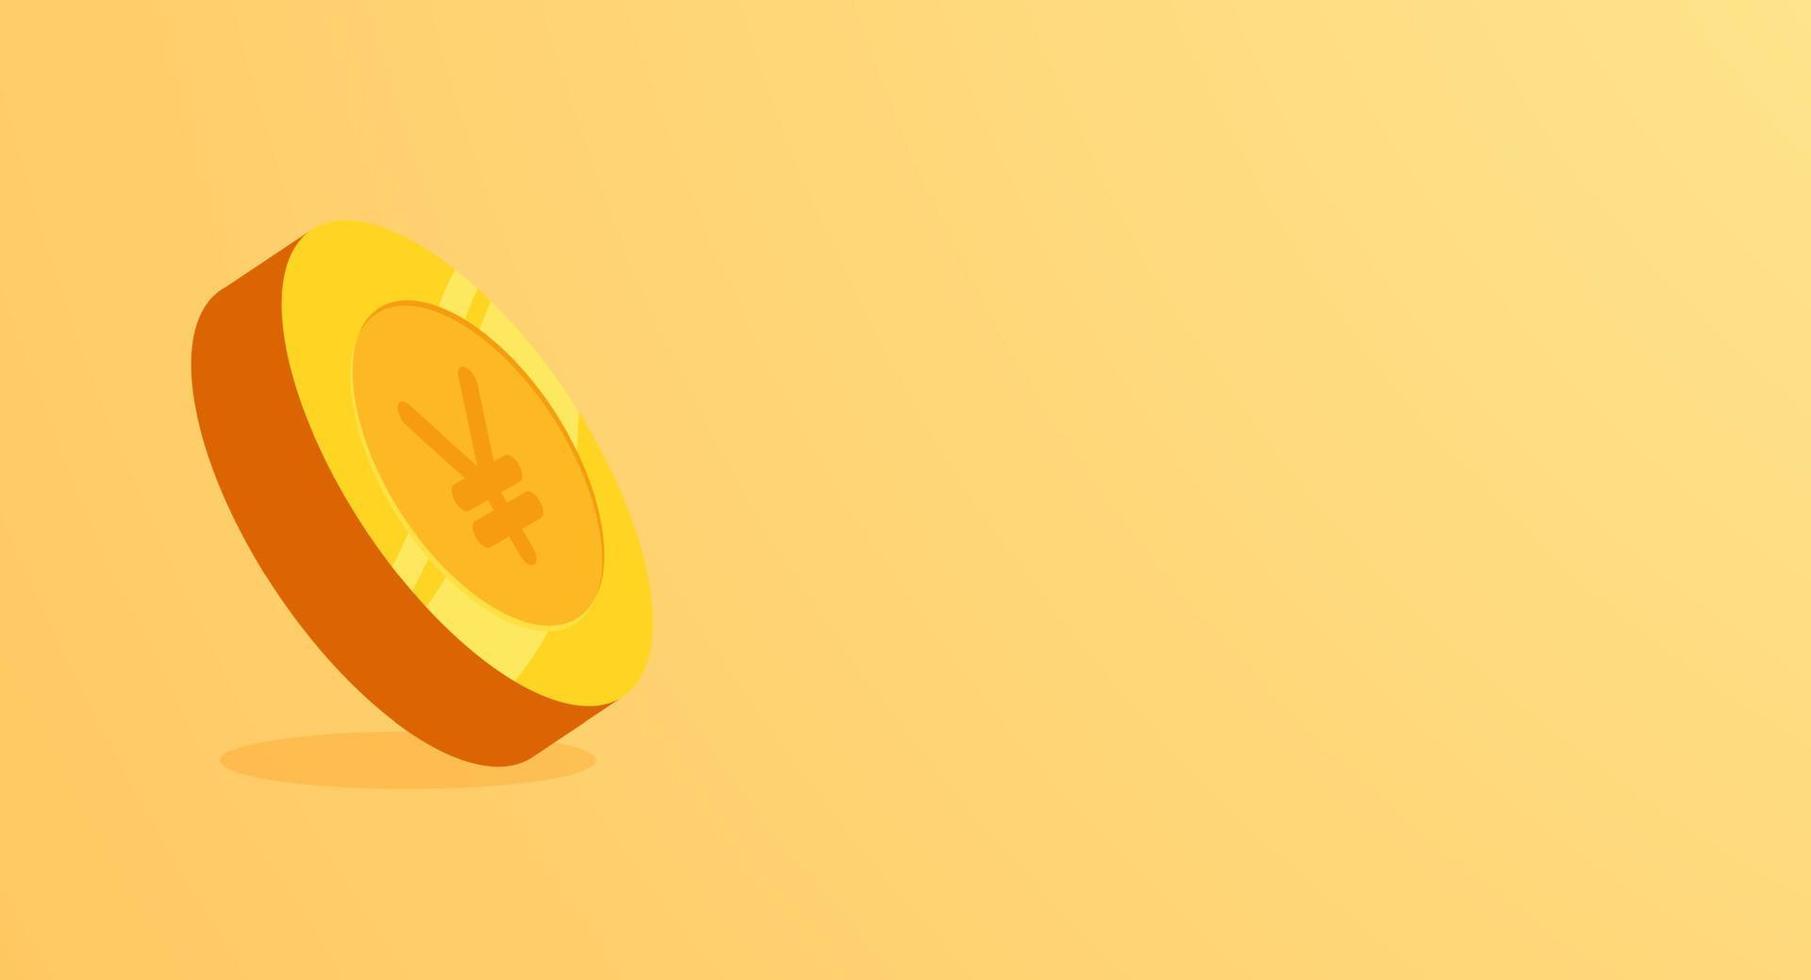 banner de yen dorado aislado sobre fondo amarillo. Ilustración de vector de moneda 3d.